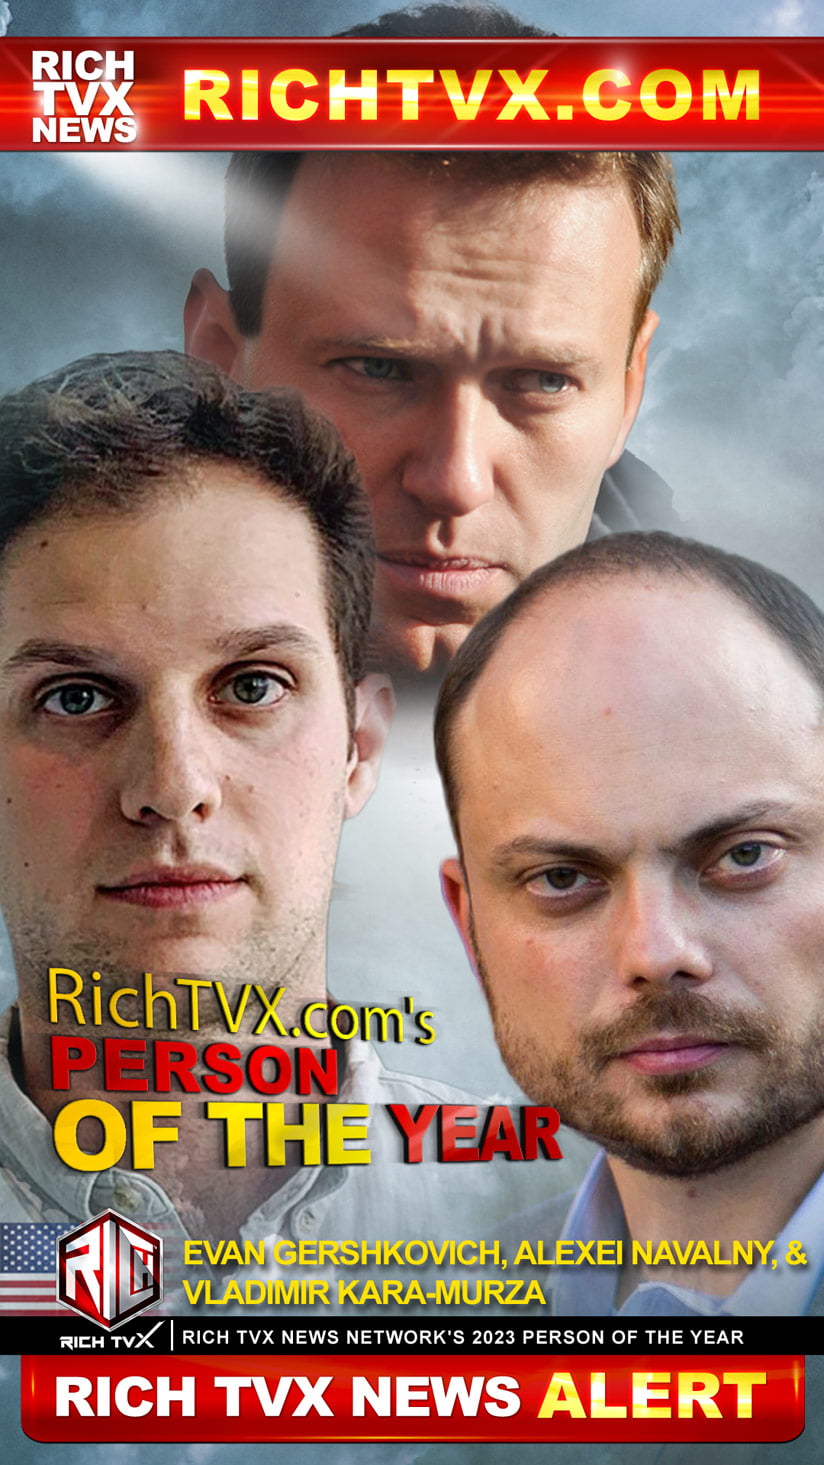 Evan Gershkovich, Alexei Navalny, & Vladimir Kara-Murza Named Joint “Person of the Year” for 2023